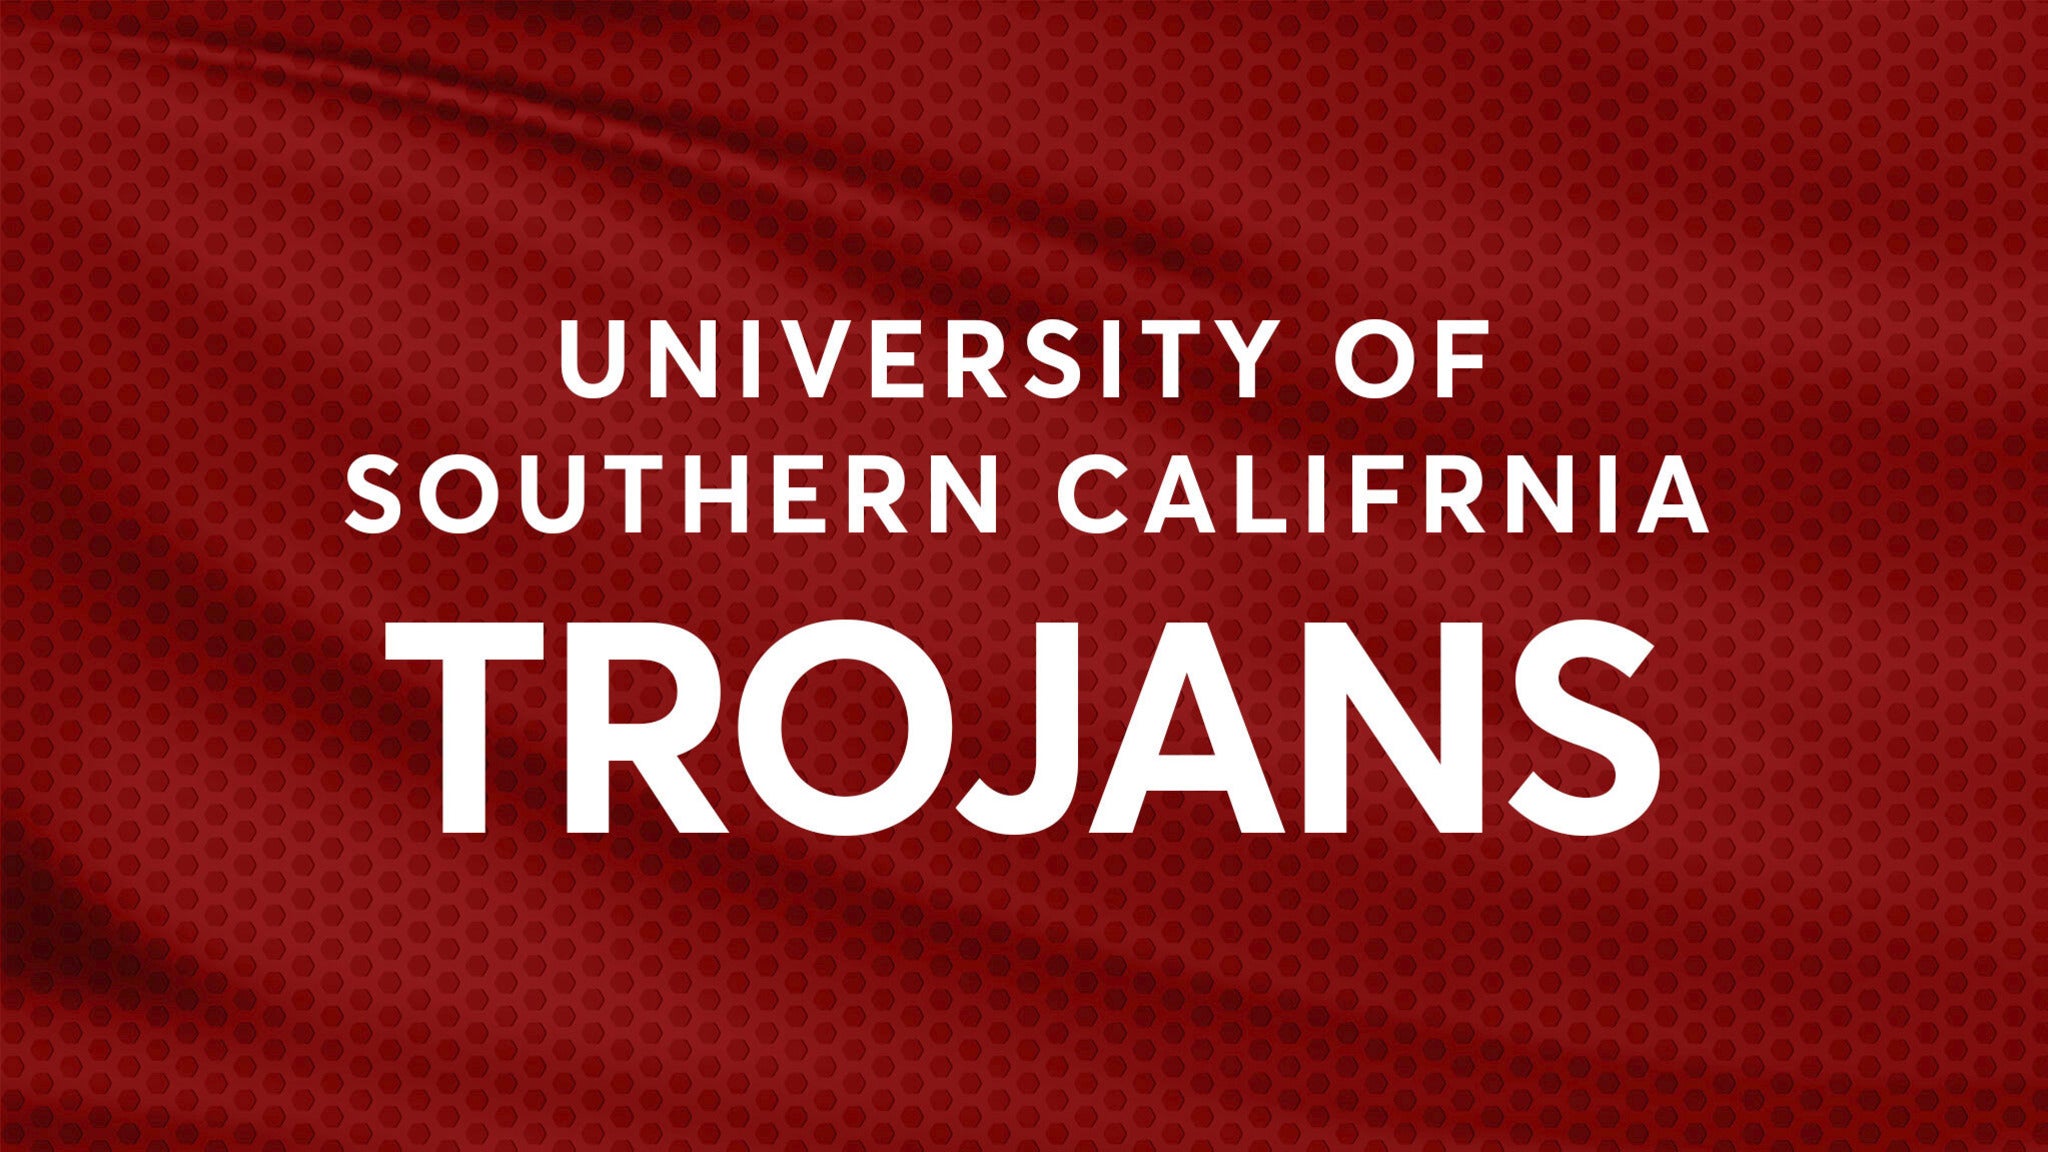 USC Trojans Football vs. UCLA Bruins Football - Los Angeles, CA 90037